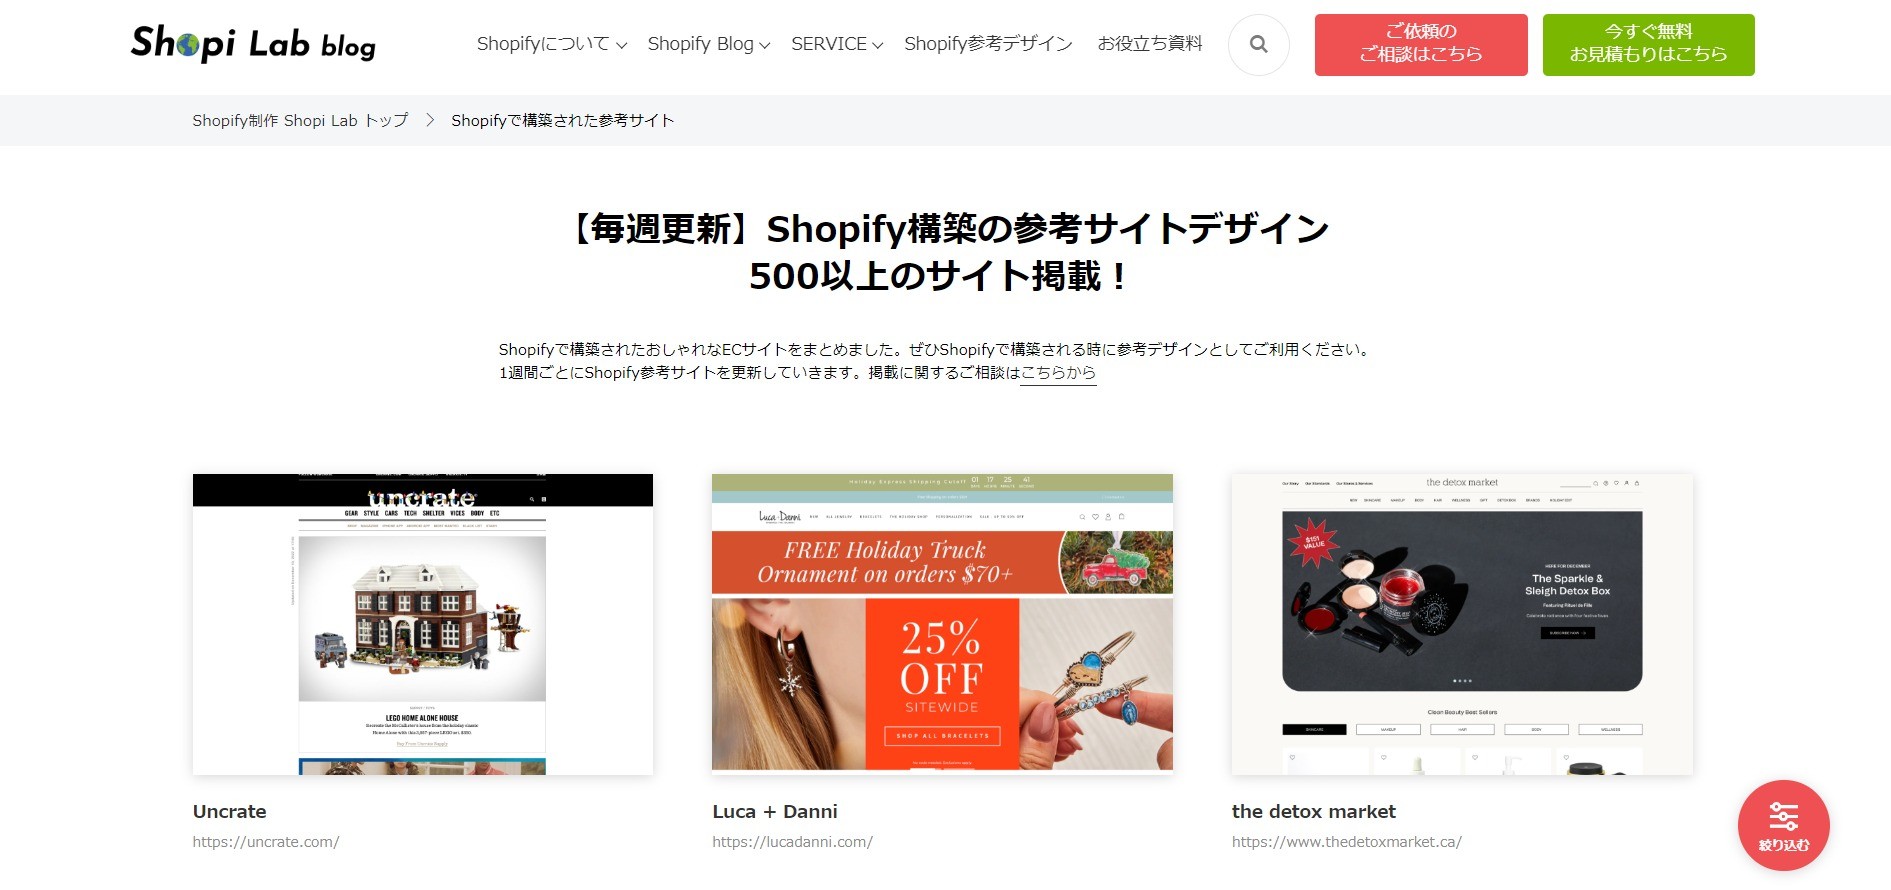 Shopi Lab blog